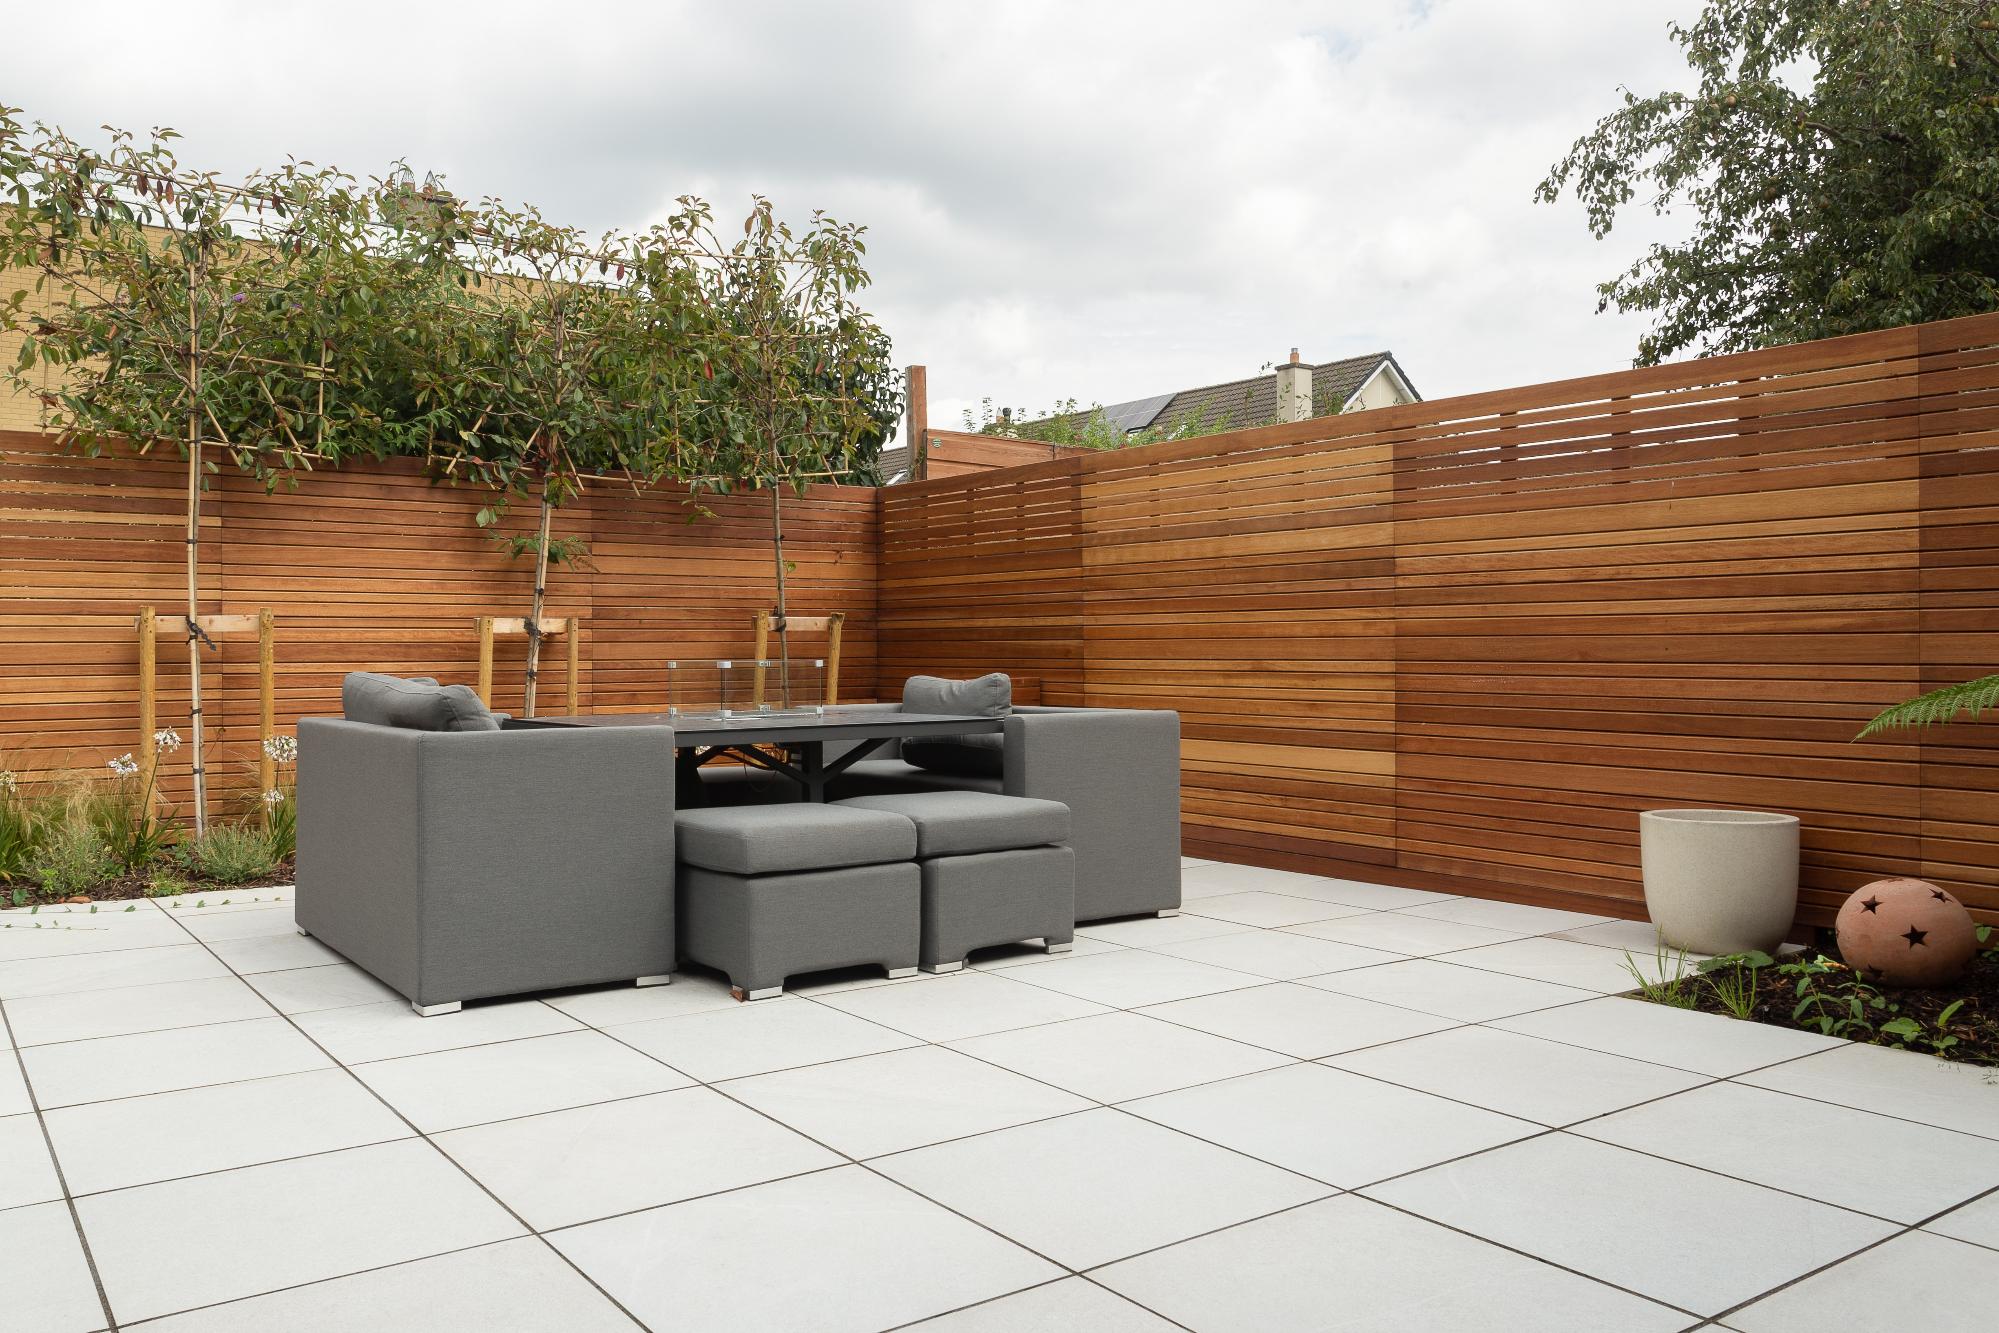 Transform Your Backyard: DIY Outdoor Living Spaces